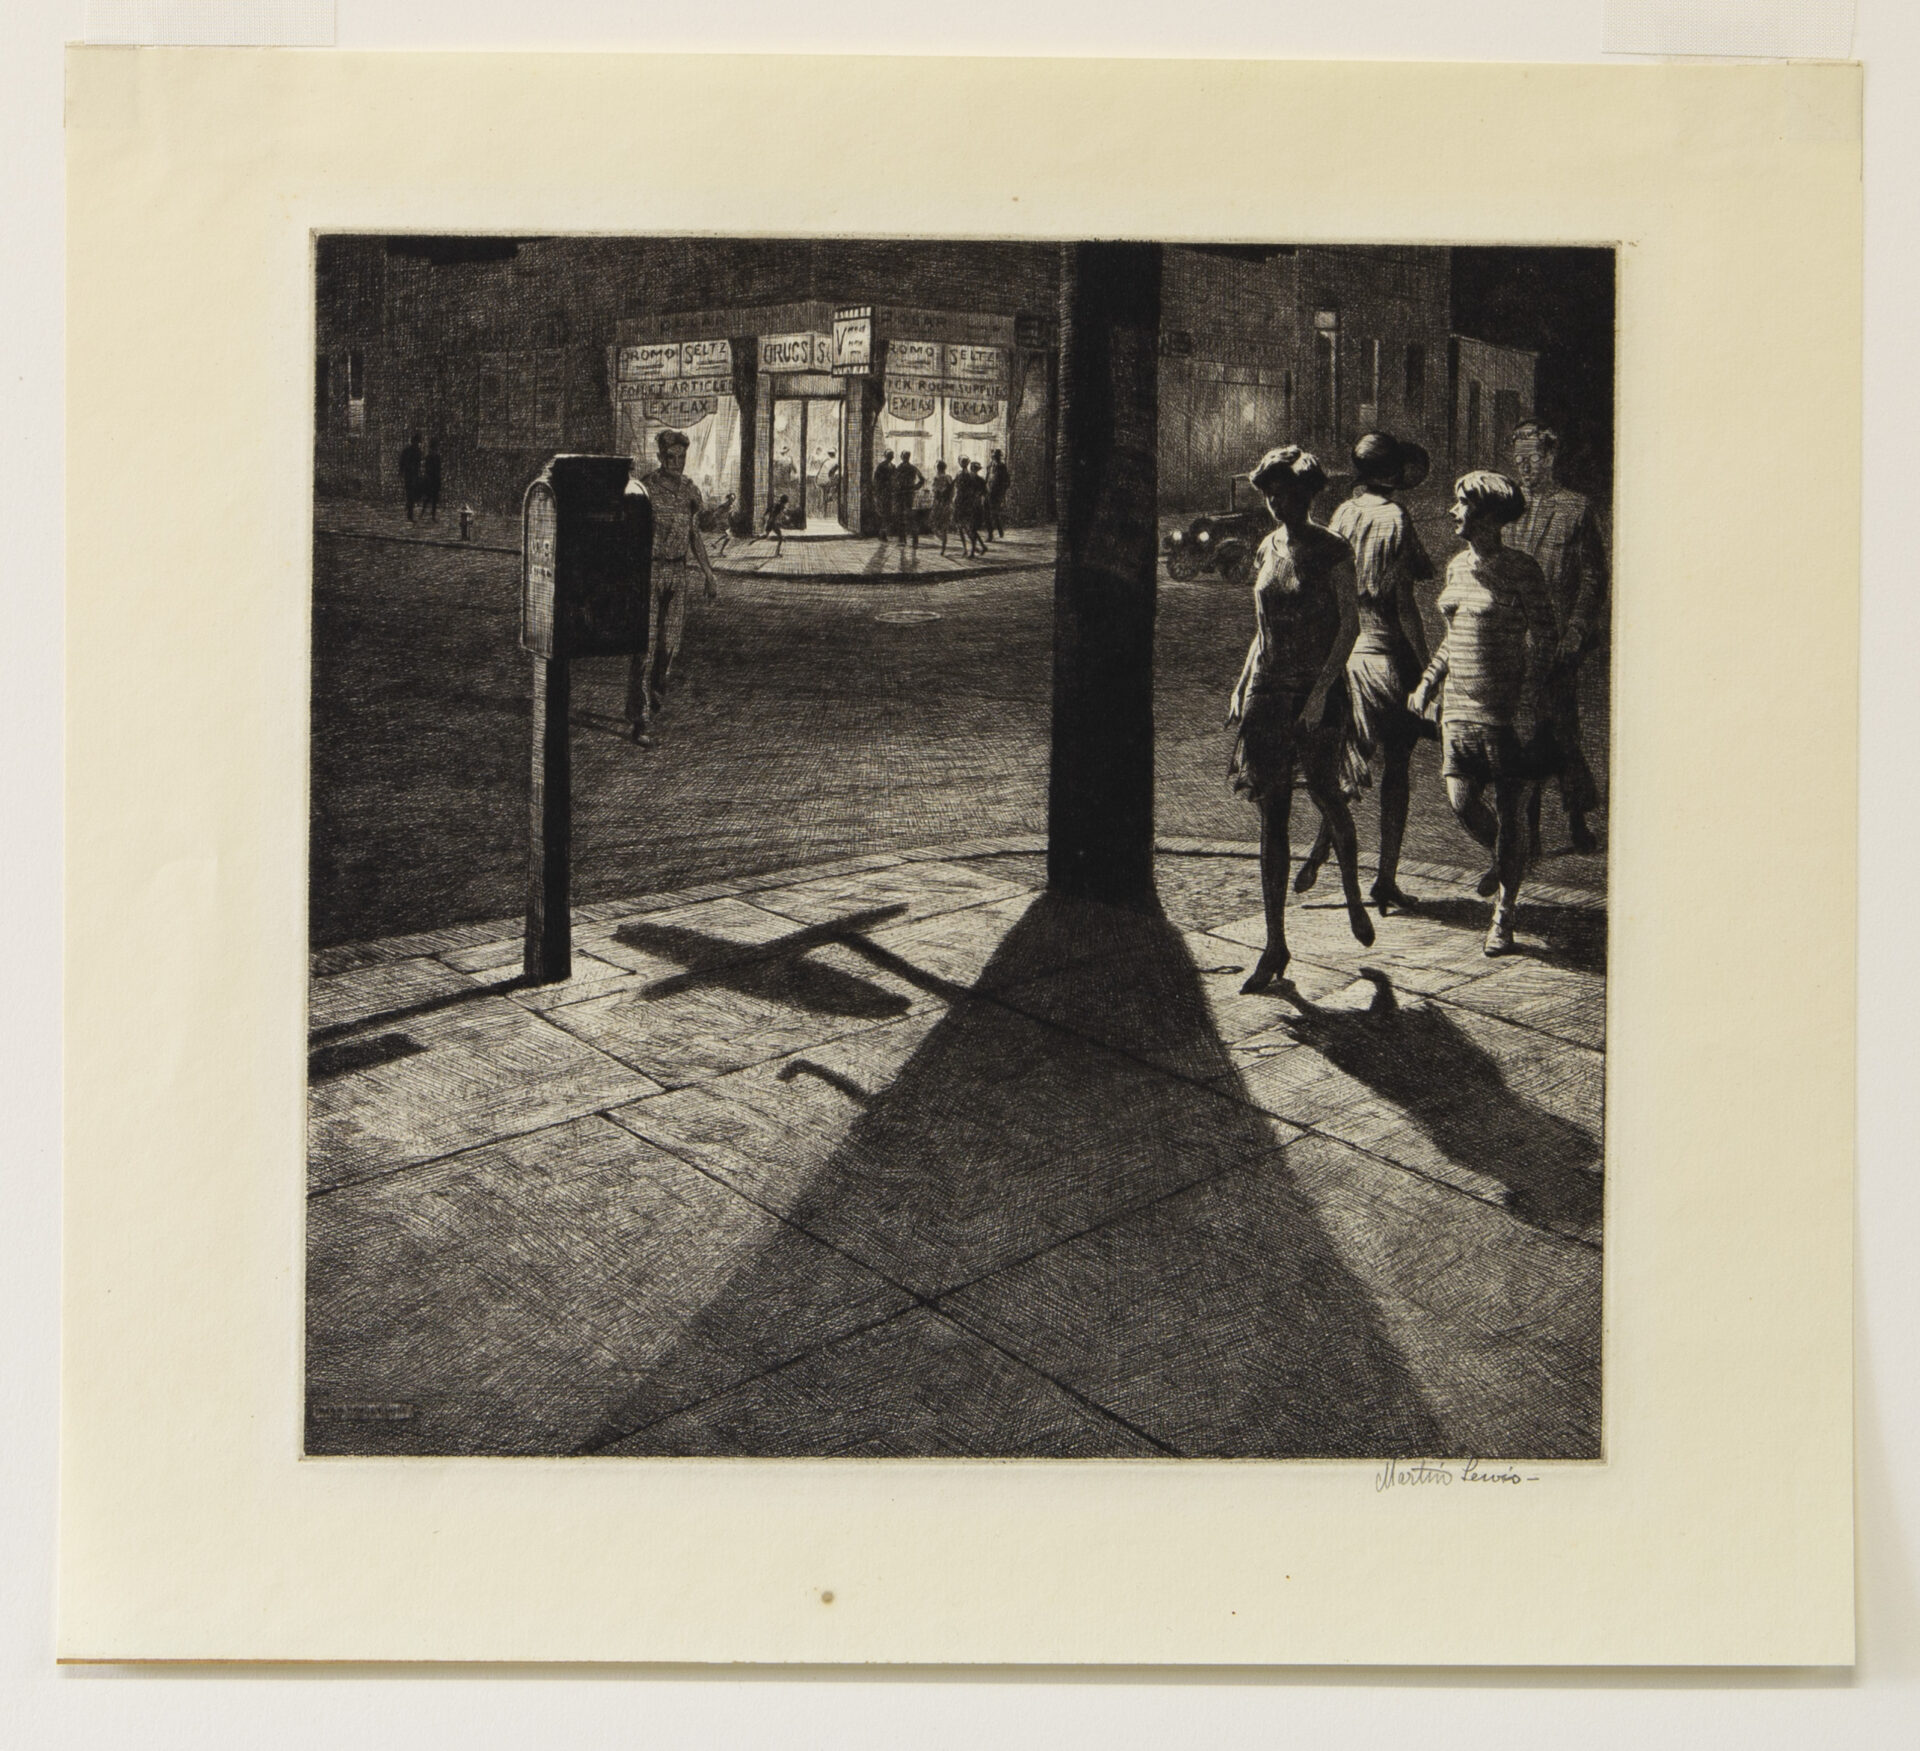 Martin Lewis Corner Shadows, 1930 Drypoint Paper Dimensions: 10 7/8 x 12 1/8 inches (27.6 x 30.8 cm) Image Dimensions: 8 3/8 x 8 15/16 inches (21.3 x 22.7 cm) Framed Dimensions: 16 x 16 inches (40.6 x 40.6 cm) Edition of 242